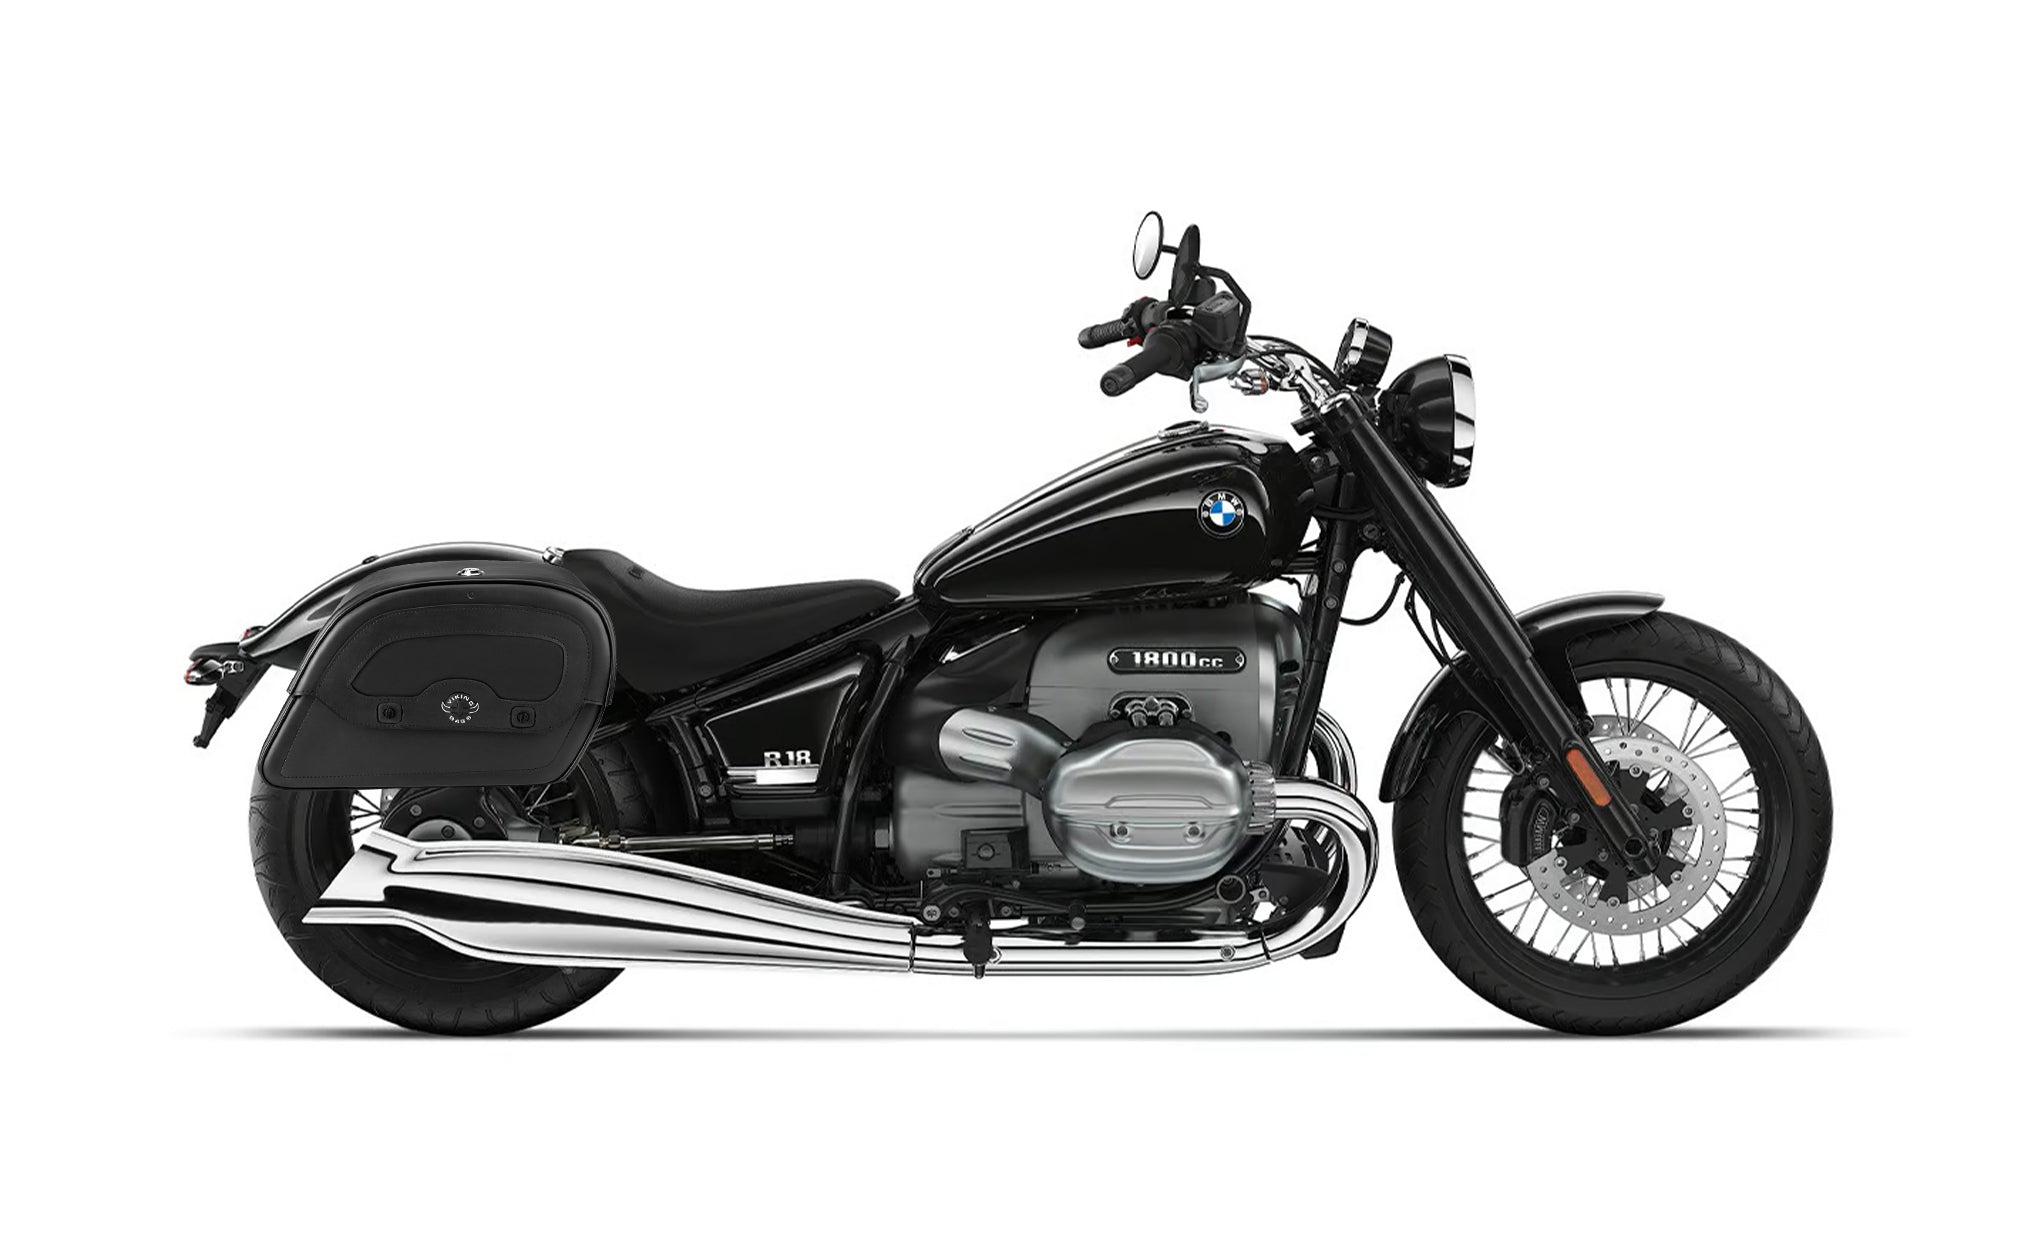 28L - Warrior Medium Quick-Mount BMW R18 Motorcycle Saddlebags @expand